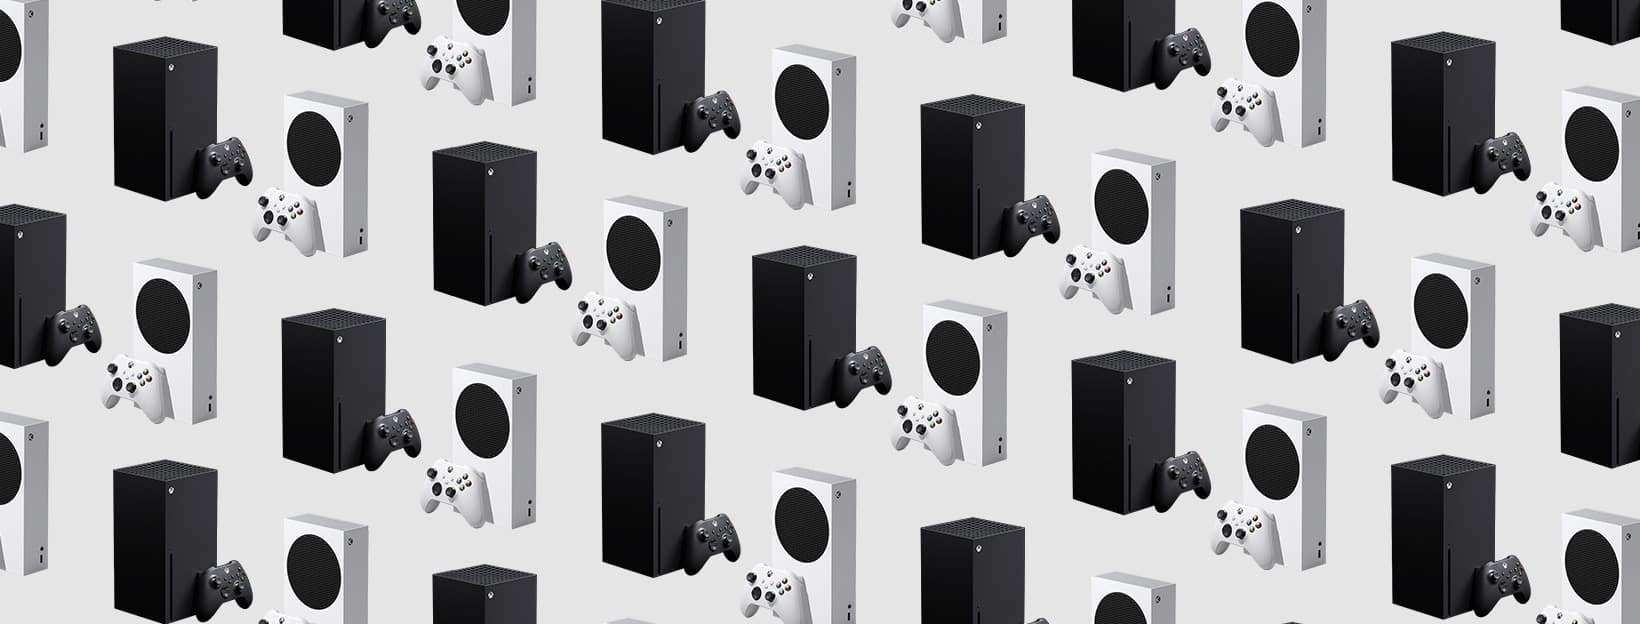 Xbox: Nytt för Microsofts konsol!